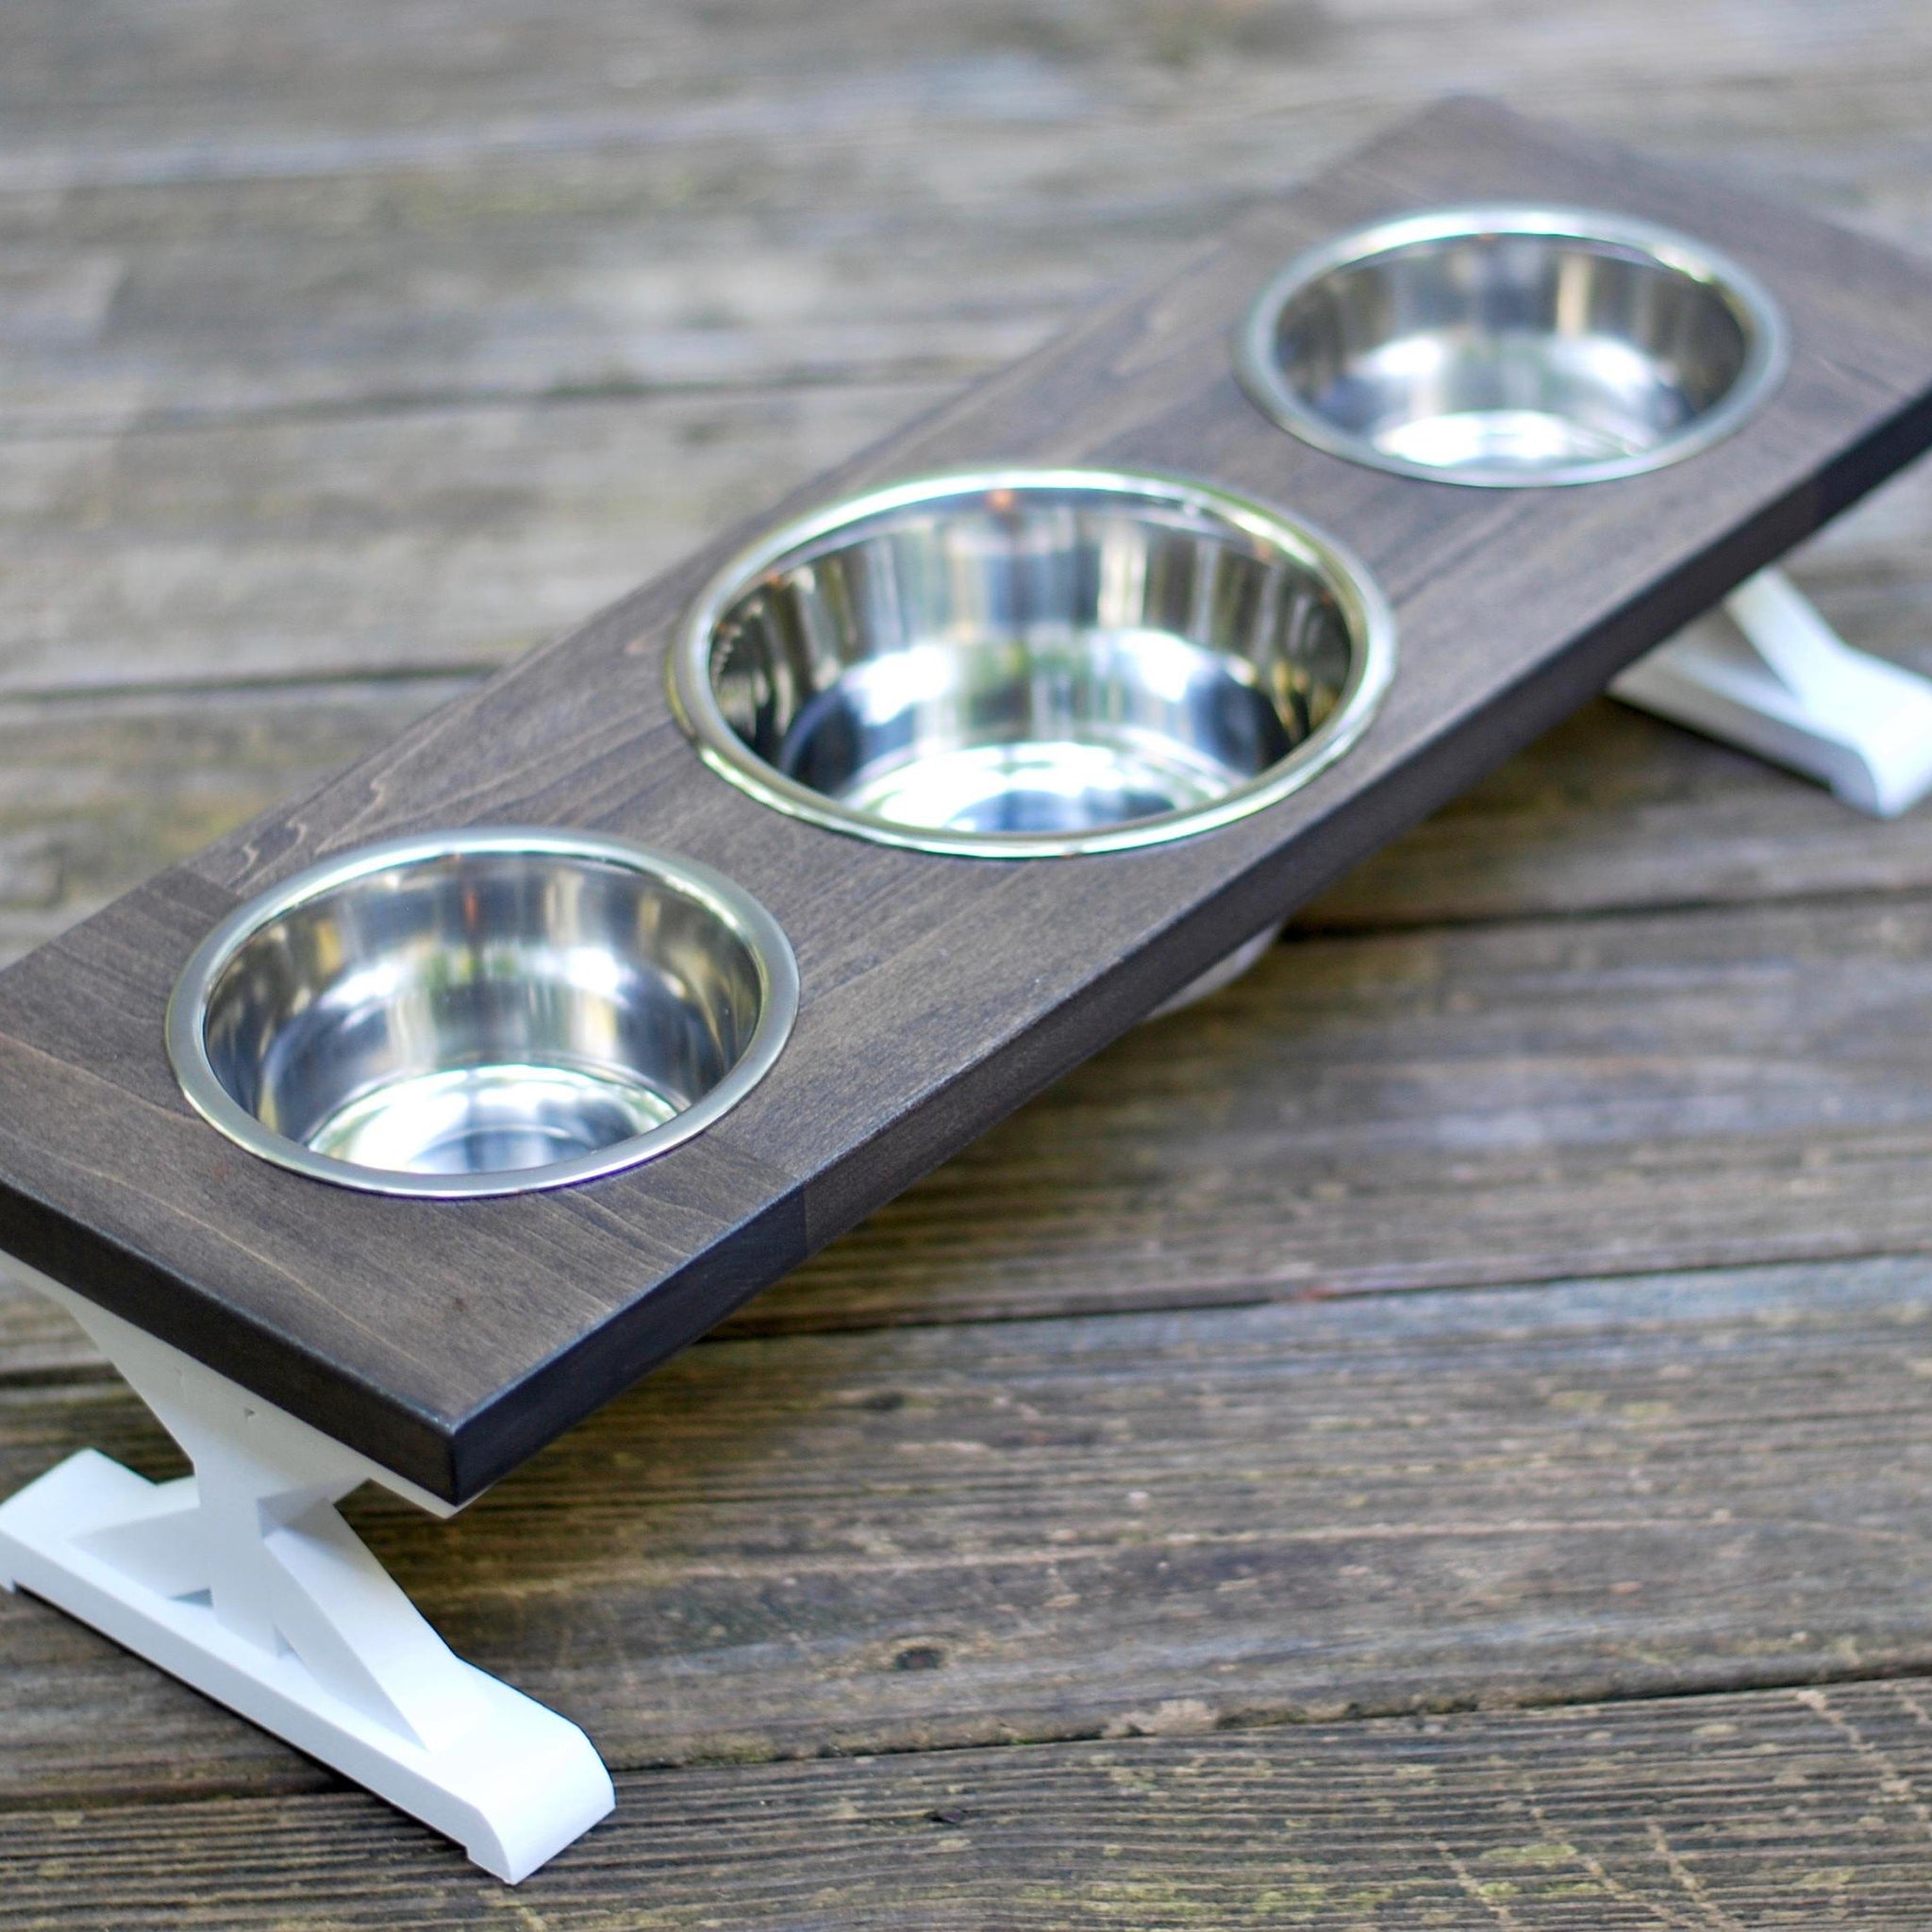 Medium Elevated Dog Bowl Stand - Trestle Farmhouse Table - Three Bowl Stand